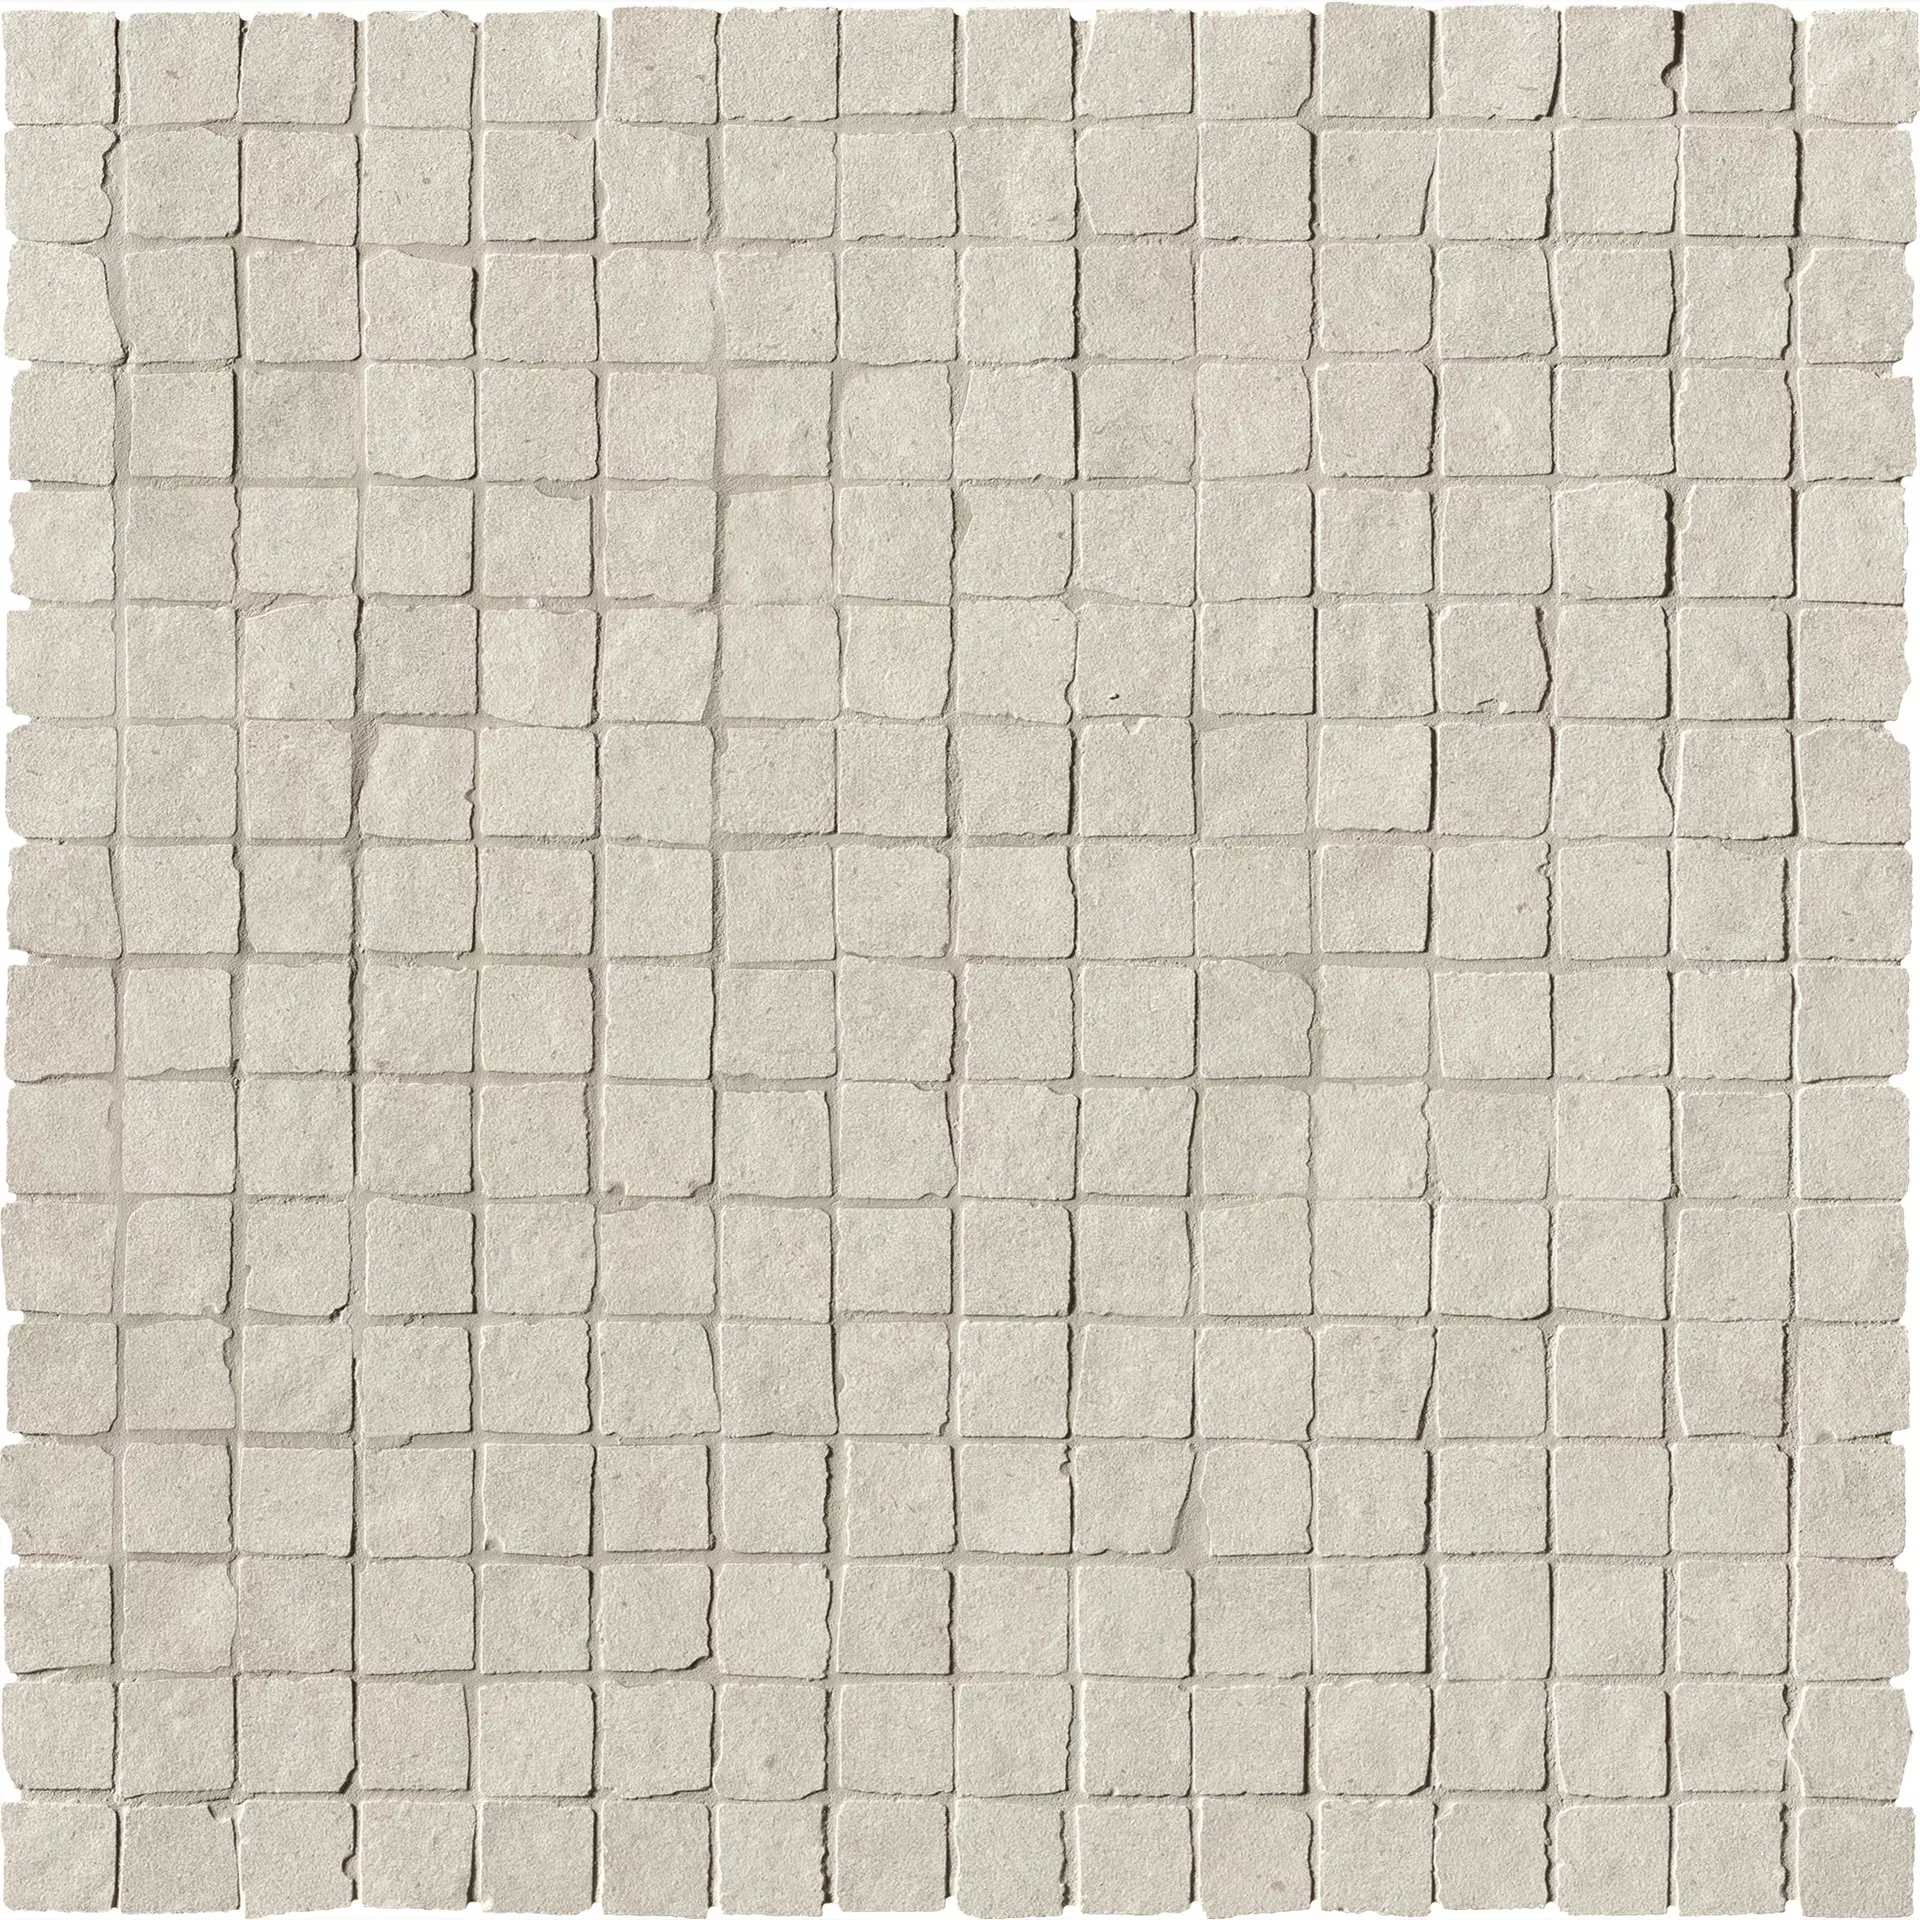 FAP Lumina Stone Grey Anticato Grey fOMQ antiquiert 30,5x30,5cm Mosaik